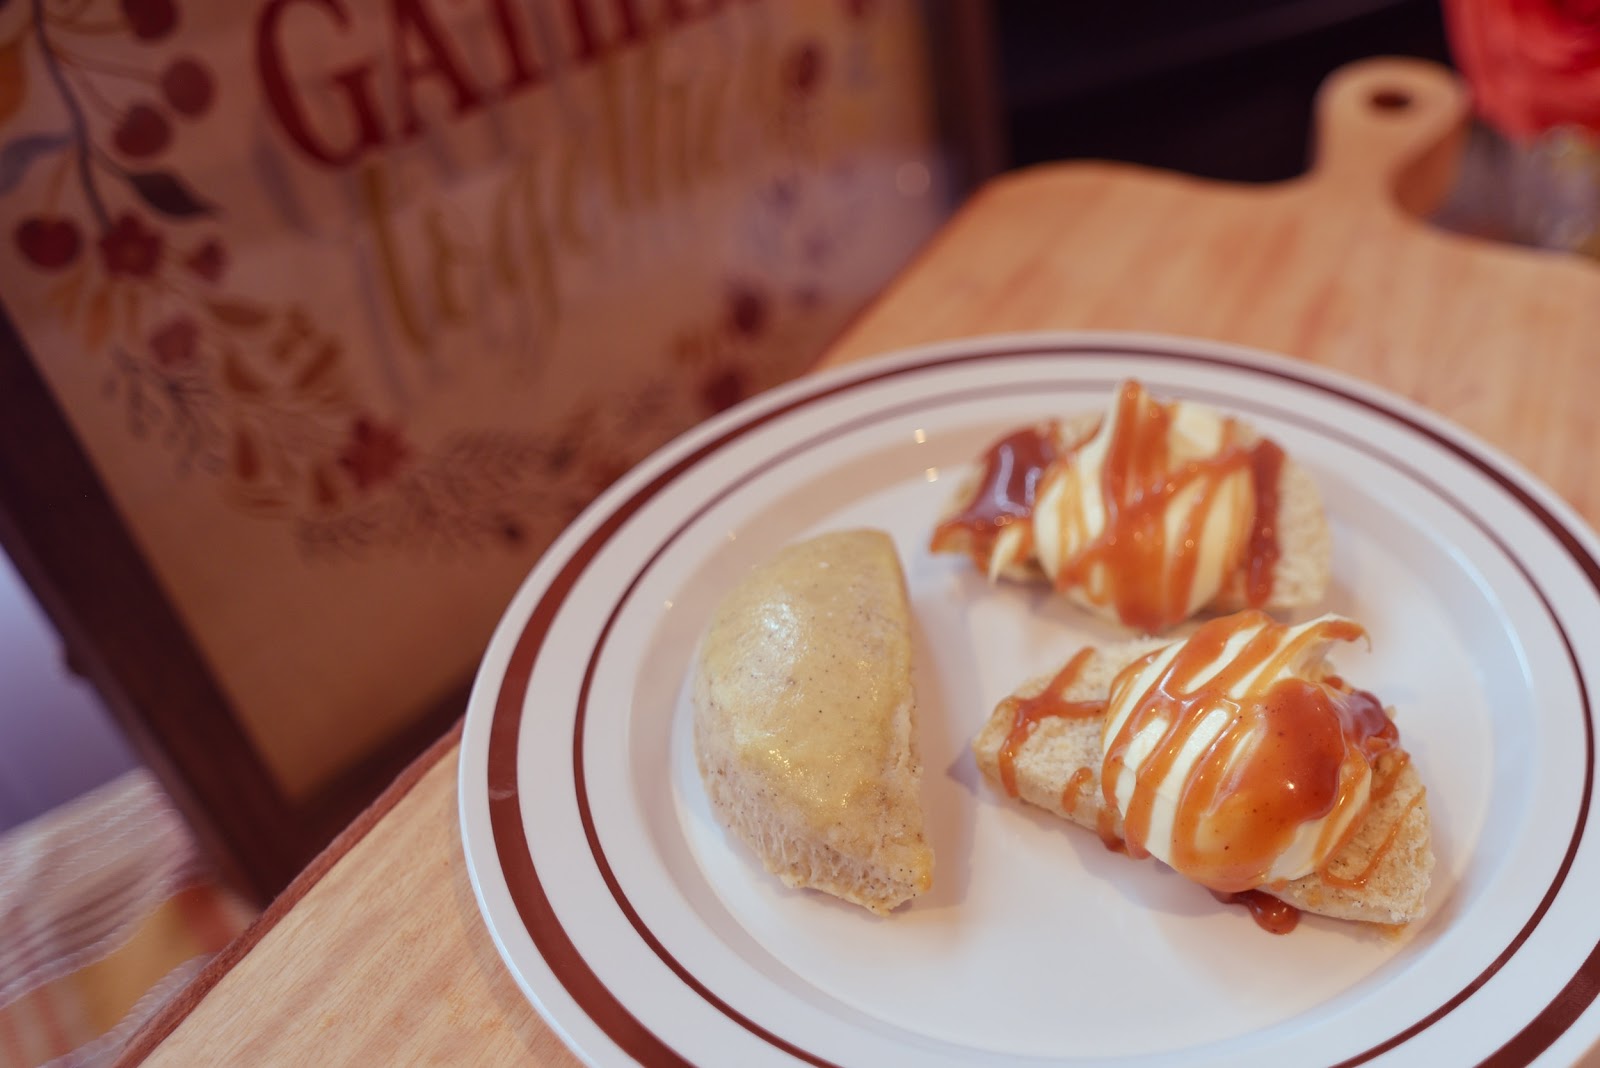 Vanilla-cardamon-scones-with-clotted-cream-chai-caramel-lily-muffins.jpg